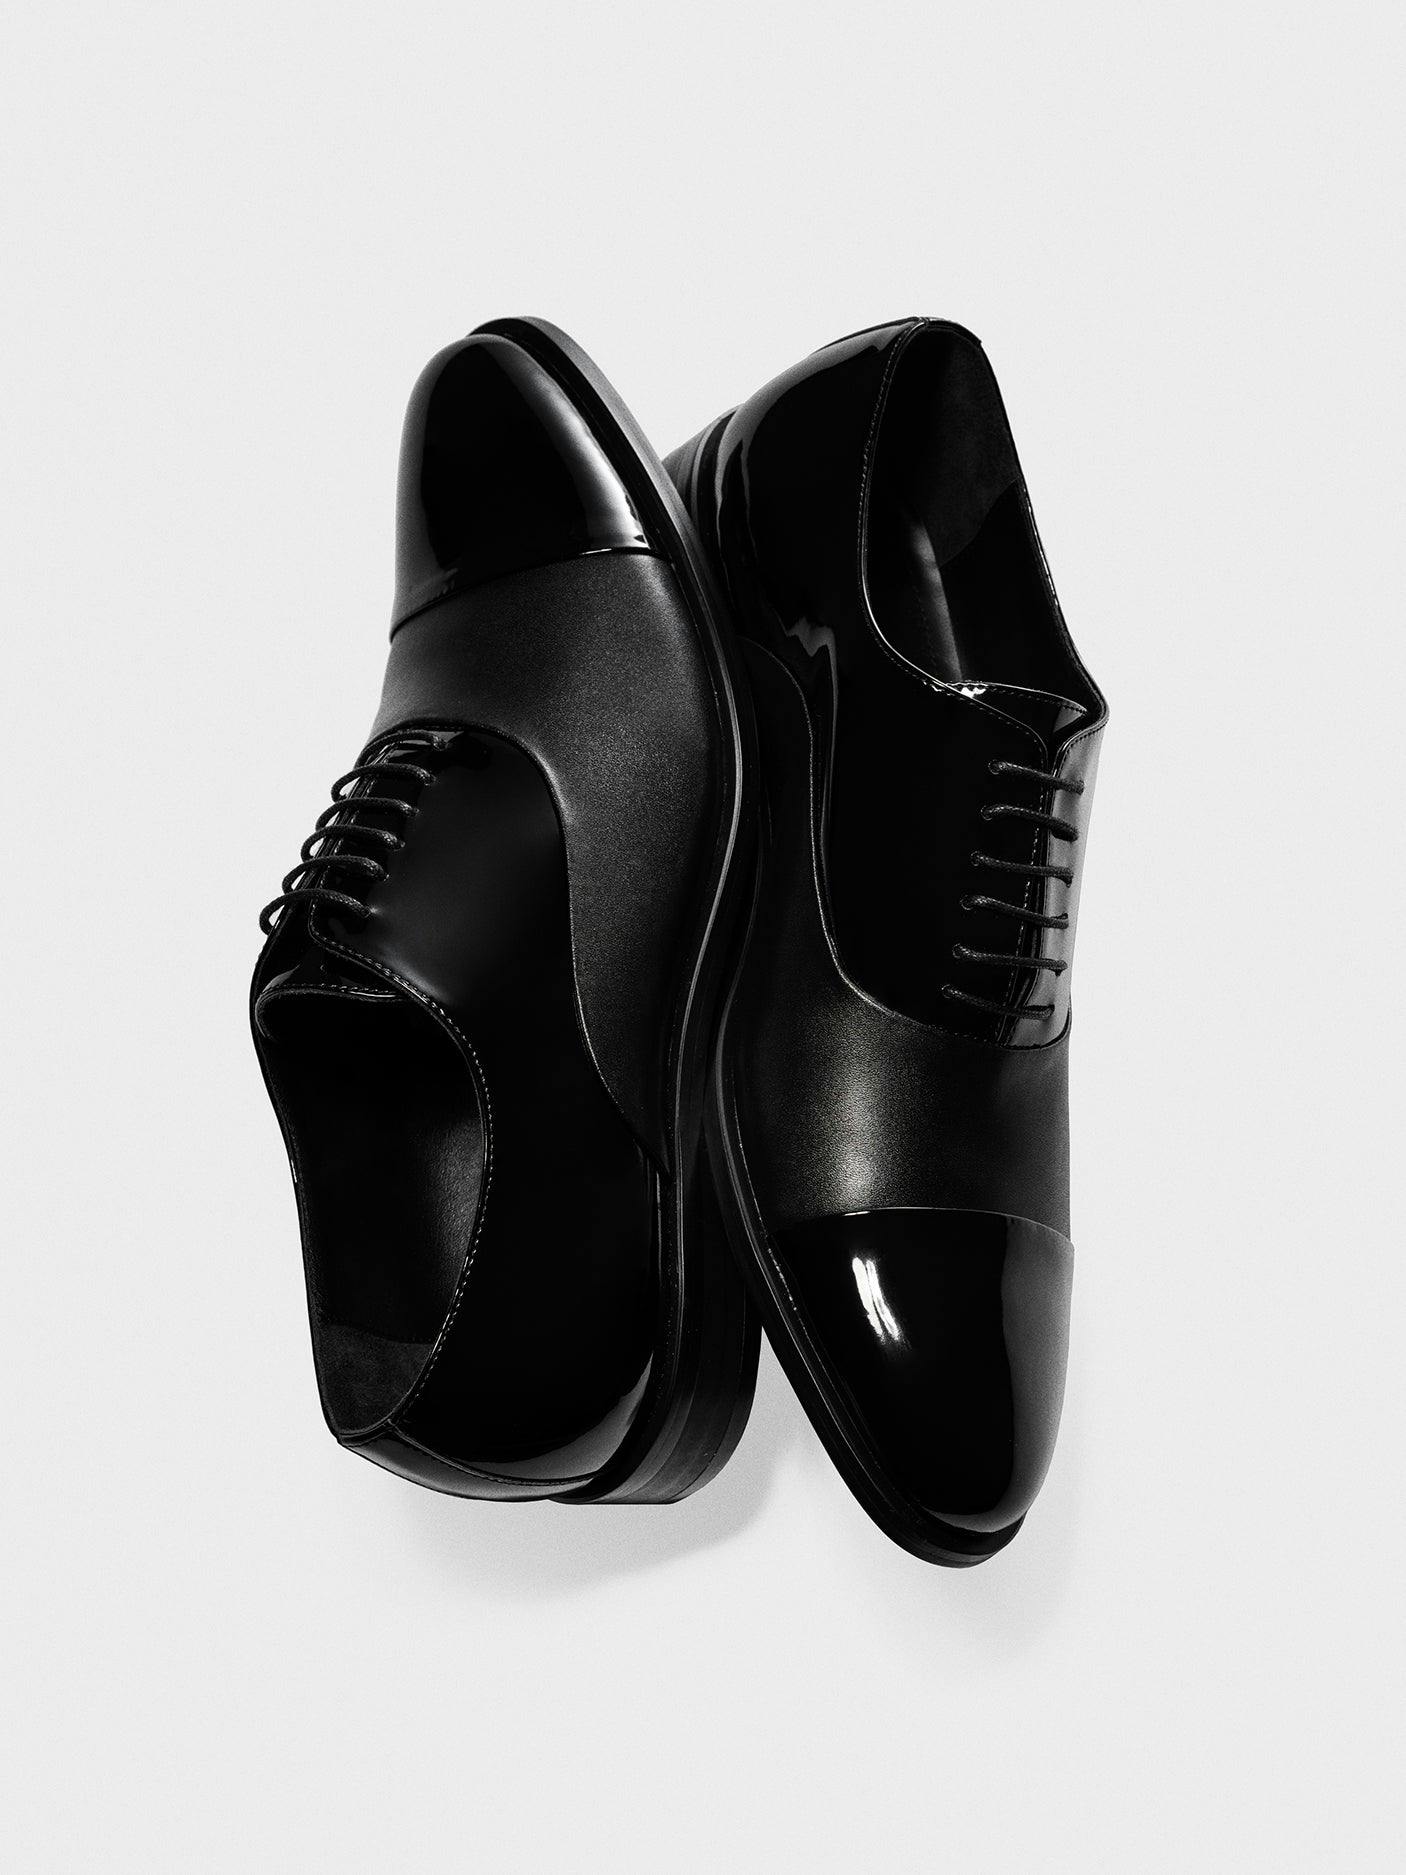 Cap Toe Shoes in Patent/Calf